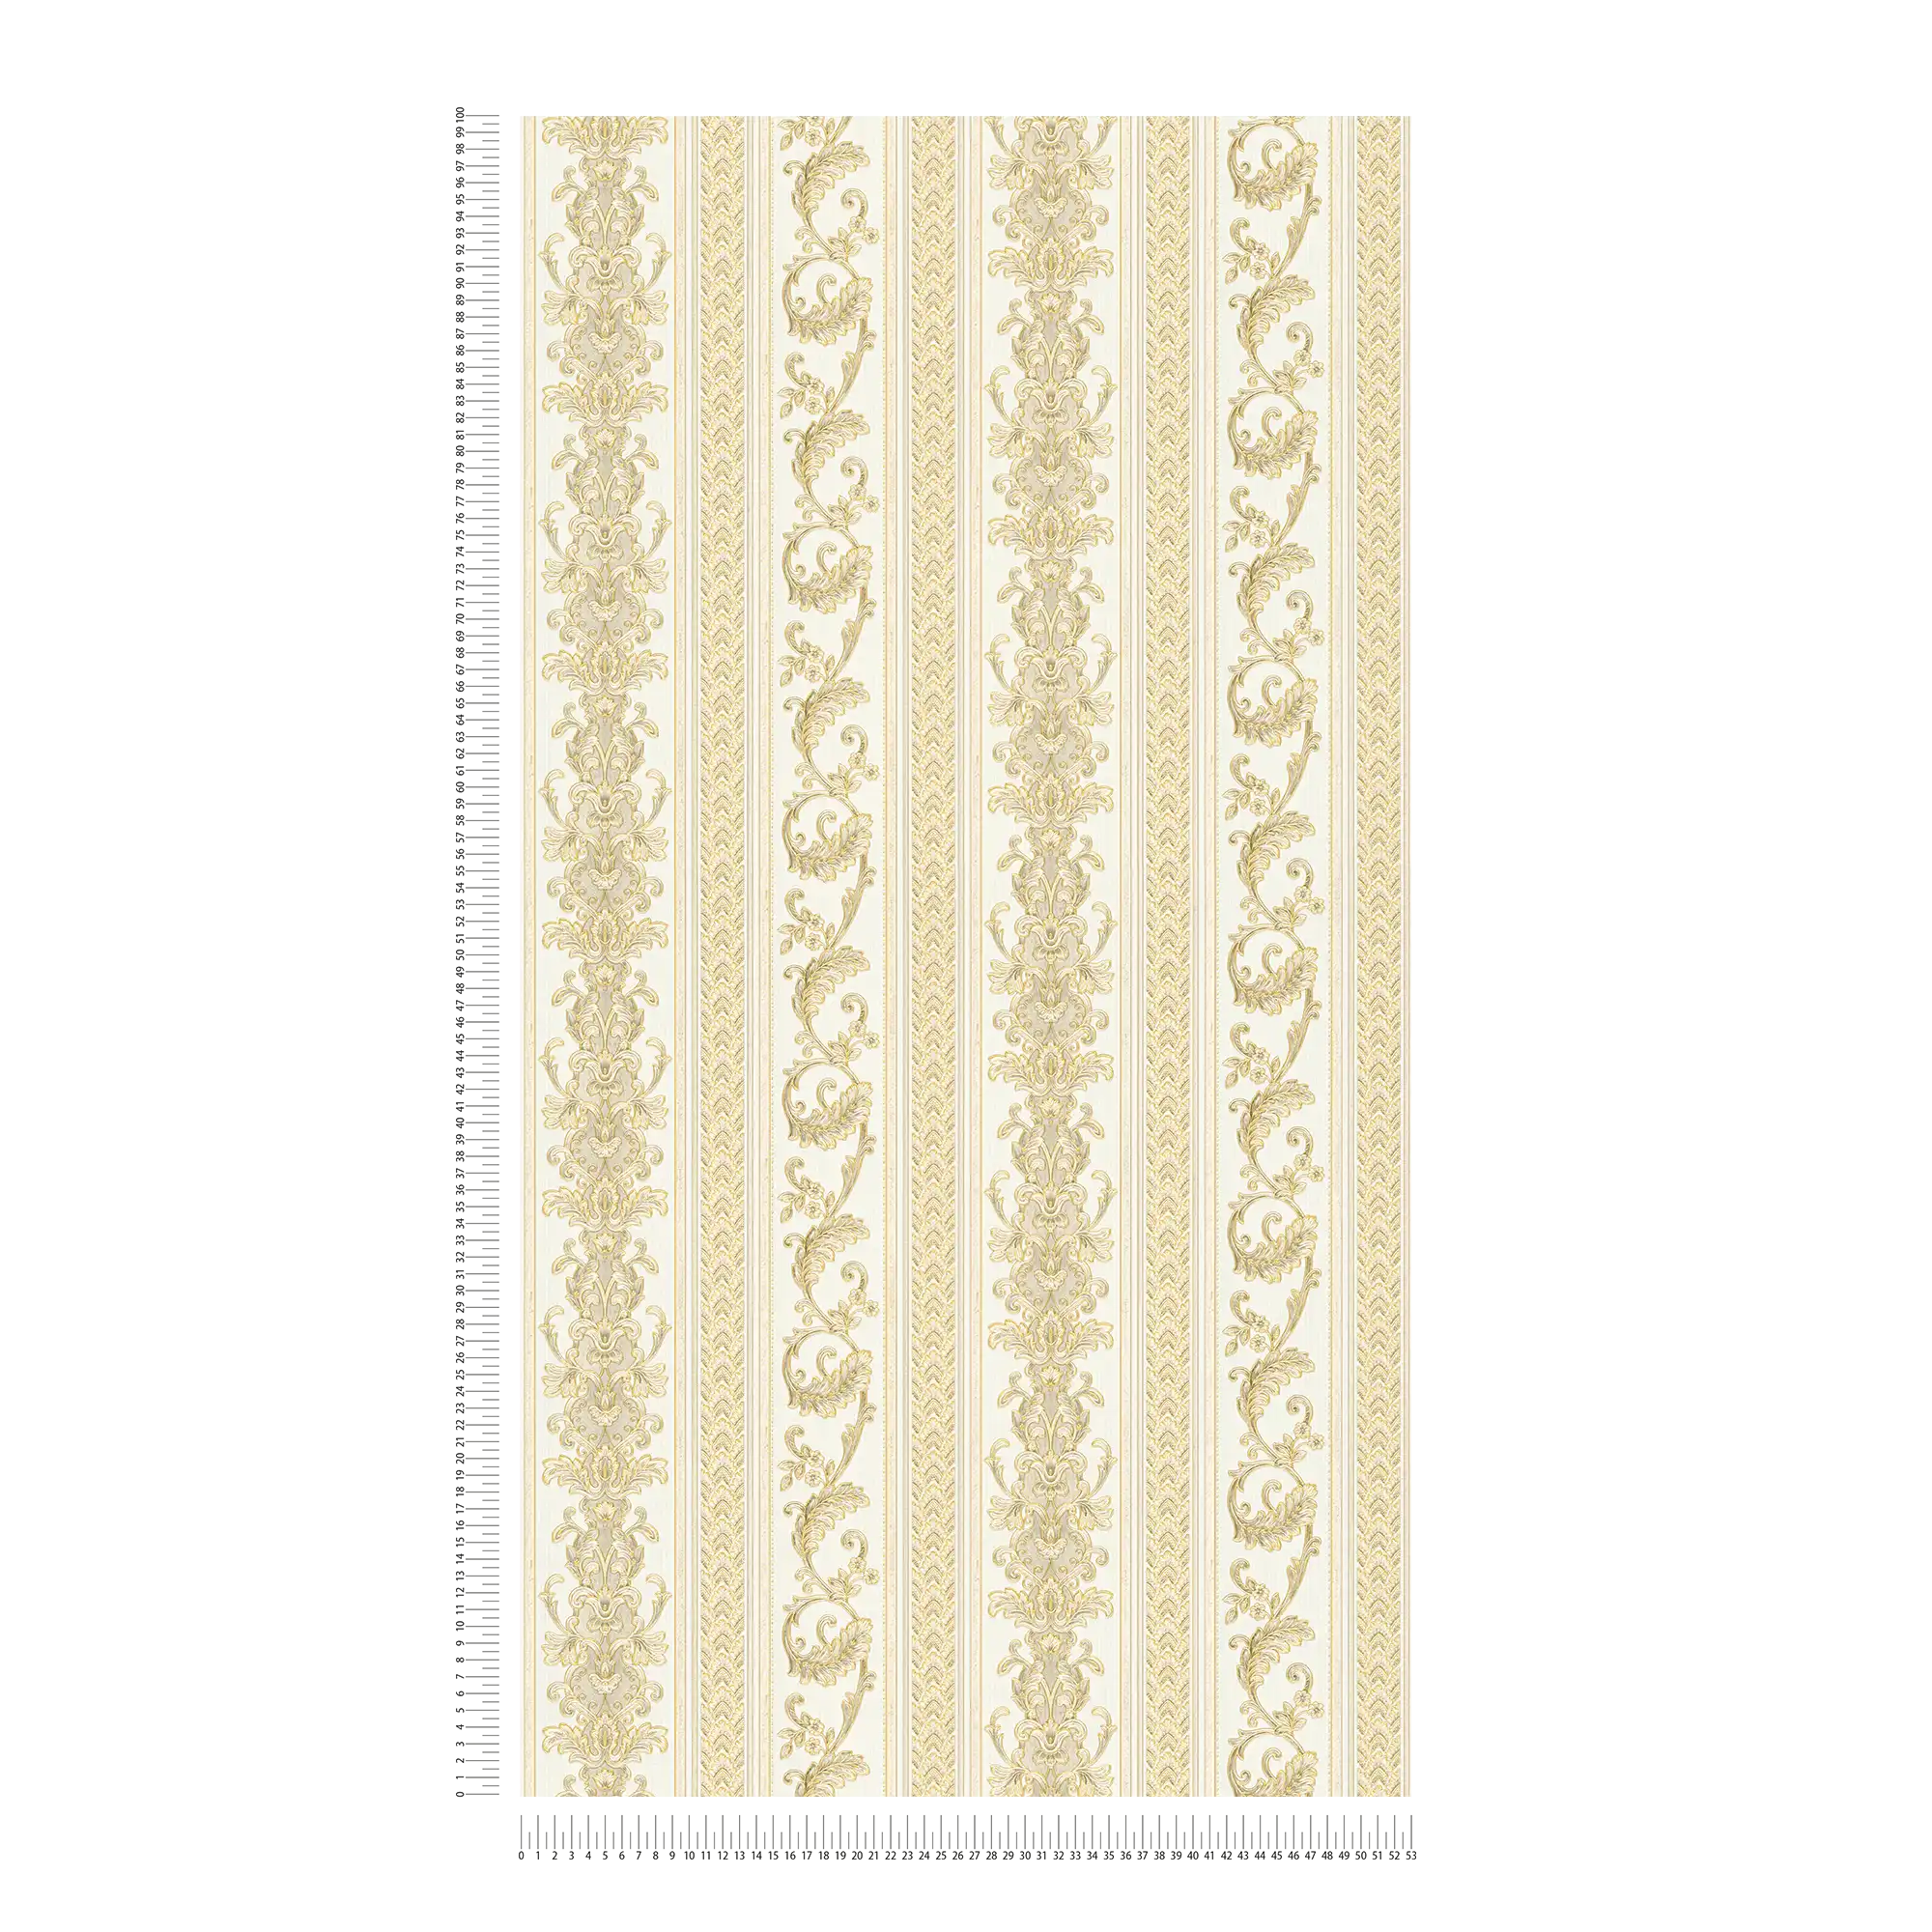             Barocke Streifentapete mit Ornamentmuster – Creme, Gold
        